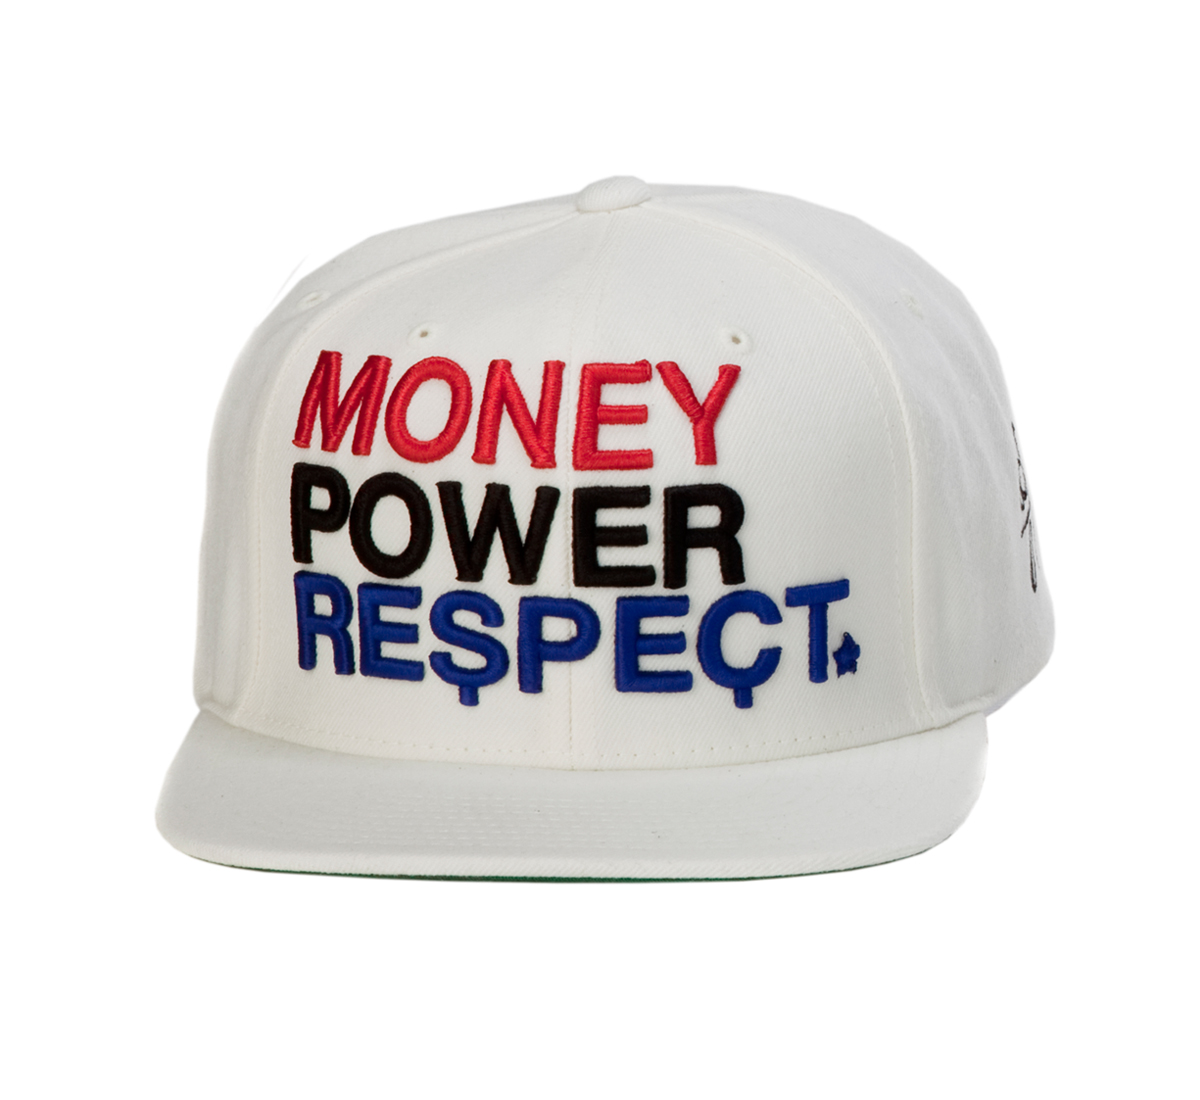 Money Power respect TM силуэт. Respect. Футболка money Power respect. Money in cap. Пауэр деньги